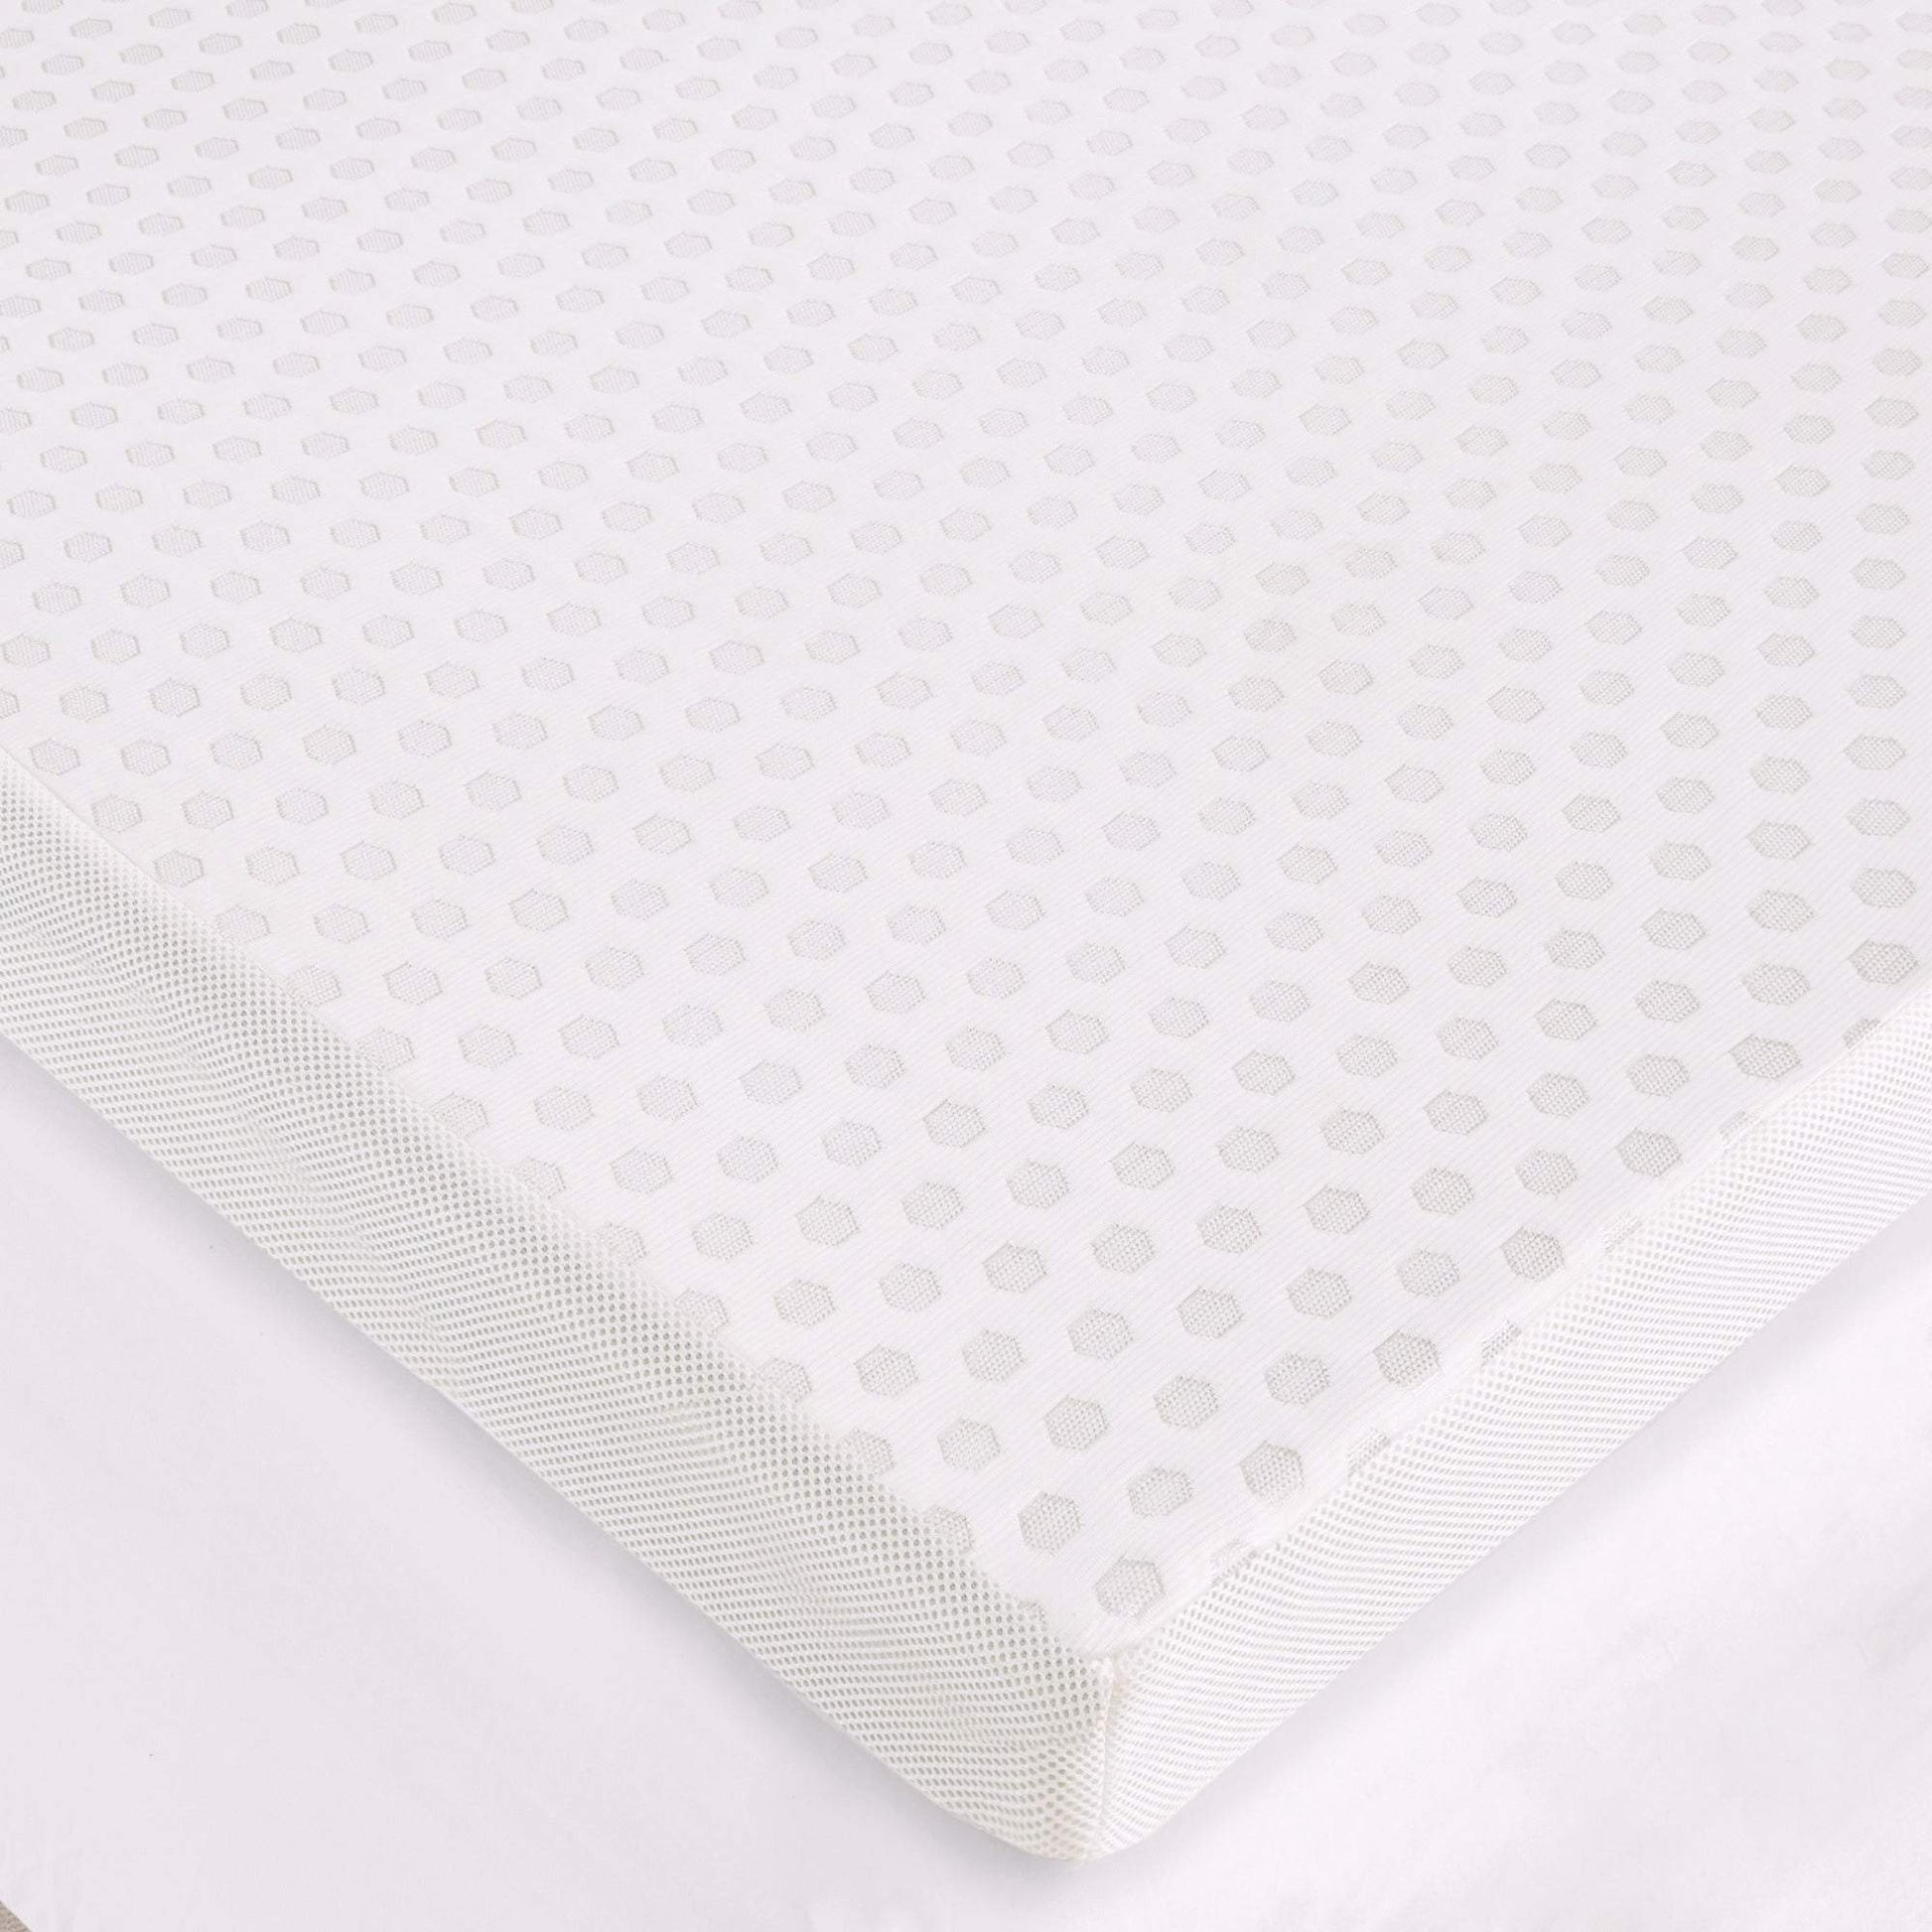 3" Gel Memory Foam with Cooling Cover White Mattress Topper Mattress Topper By Olliix/JLA HOME (E & E Co., Ltd)